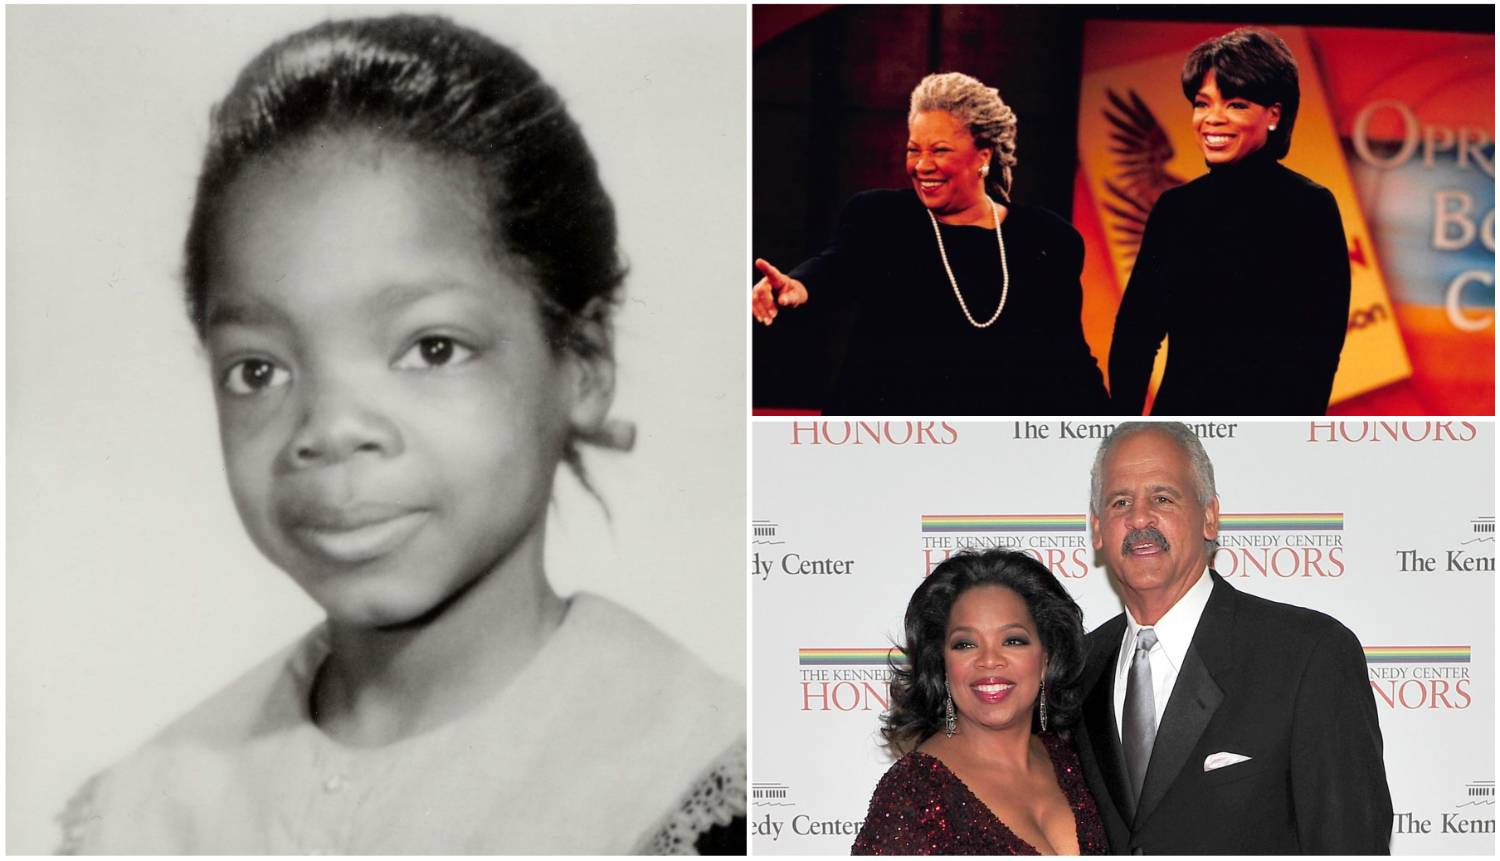 Oprah su silovali s 9, rodila je s 14, ali dijete je umrlo. Posvetila se karijeri i zaradila milijarde